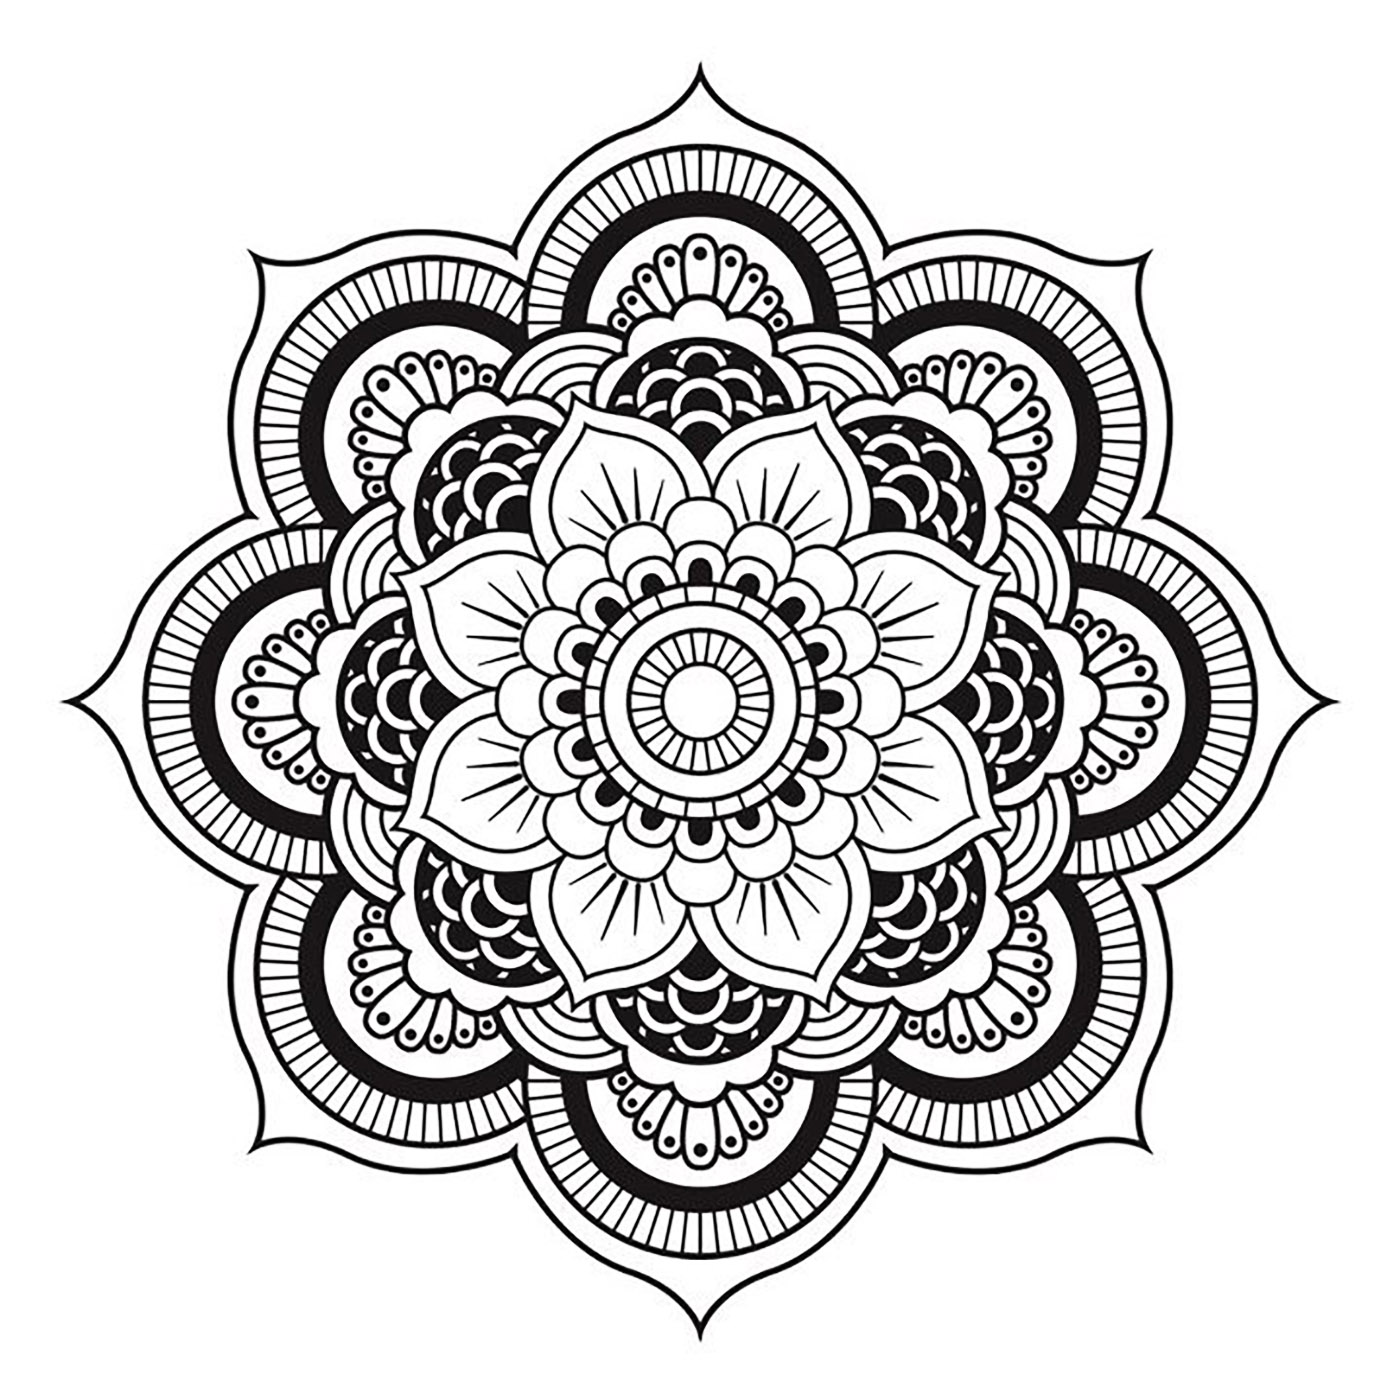 Beautiful Mandalas coloring page to print and color